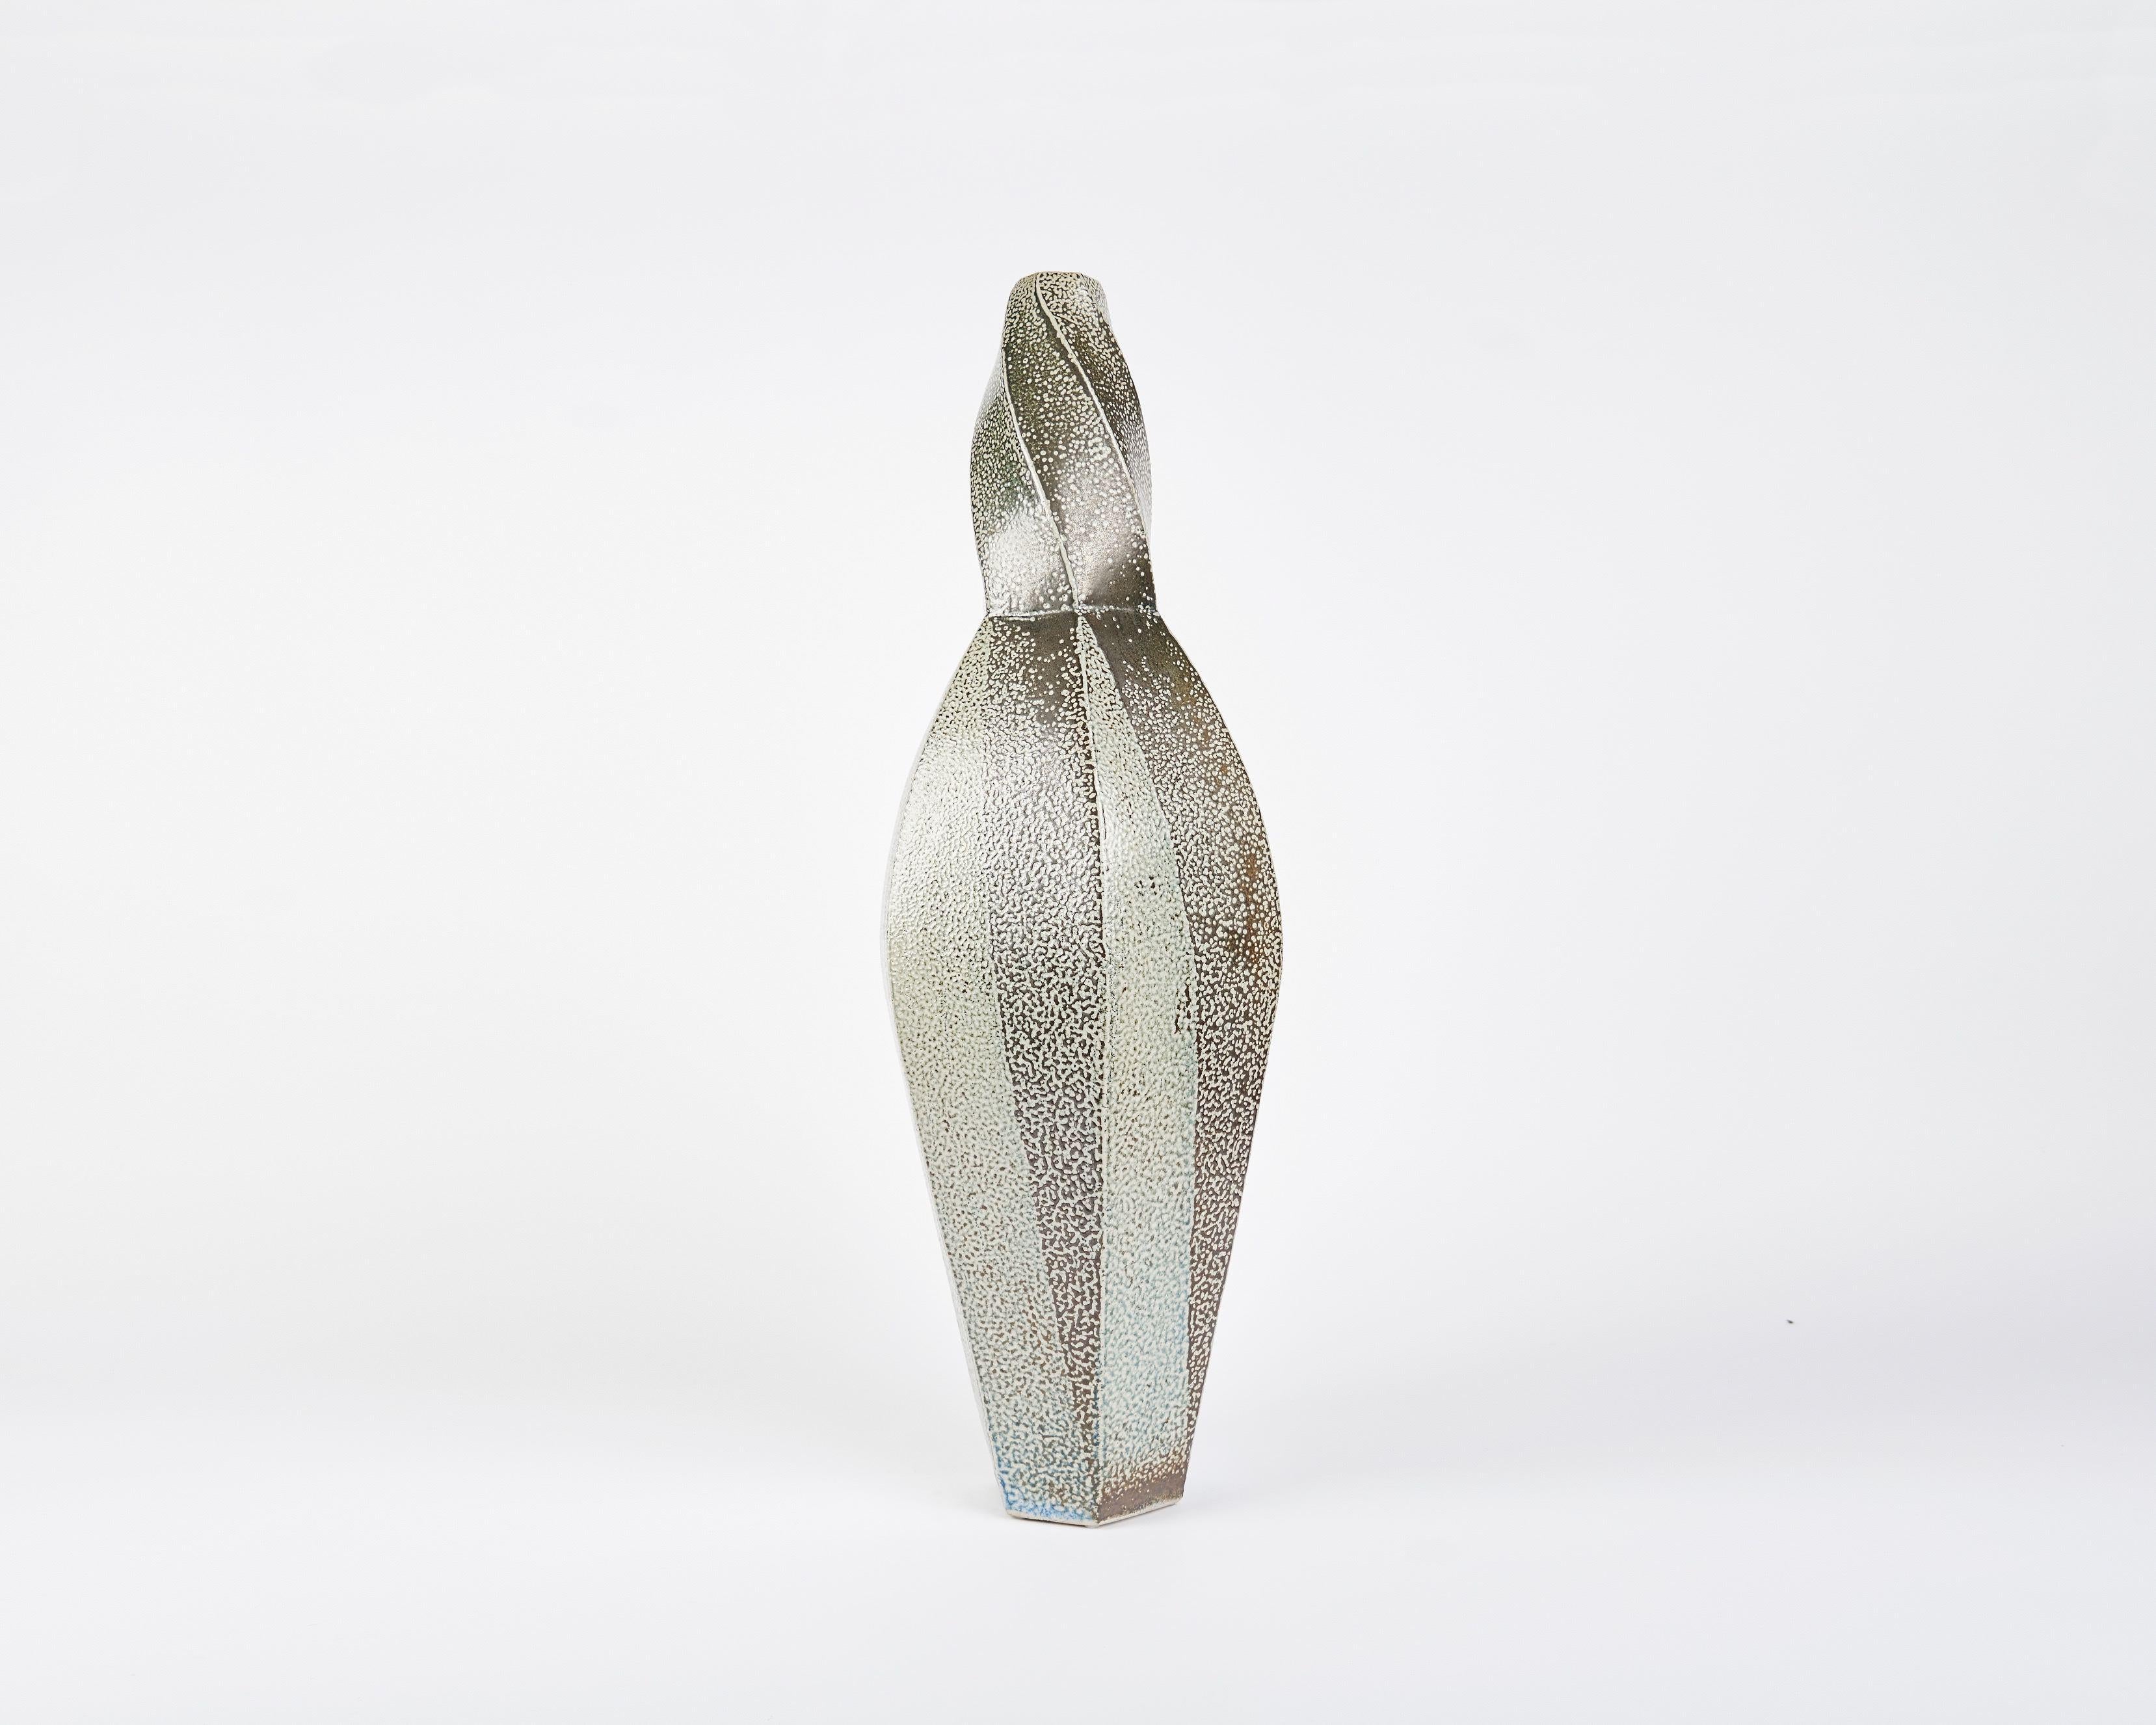 Danish Aage Birck, Twisting Ceramic Vase, Denmark, 2012 For Sale